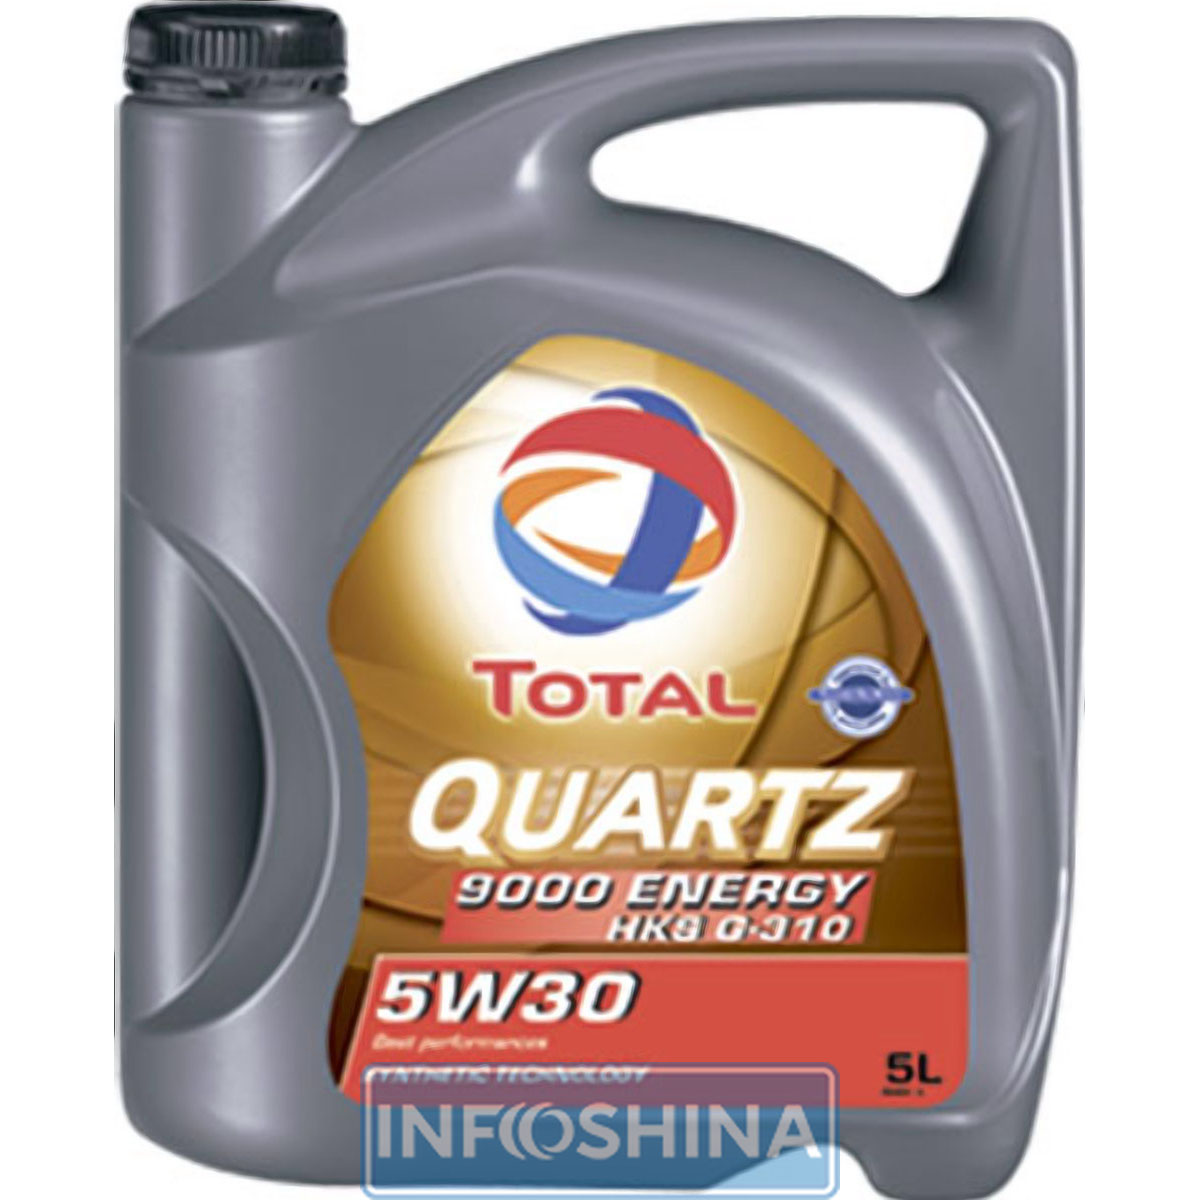 Купить масло Total Quartz 9000 Energy HKS G-310 5W-30 (5л)